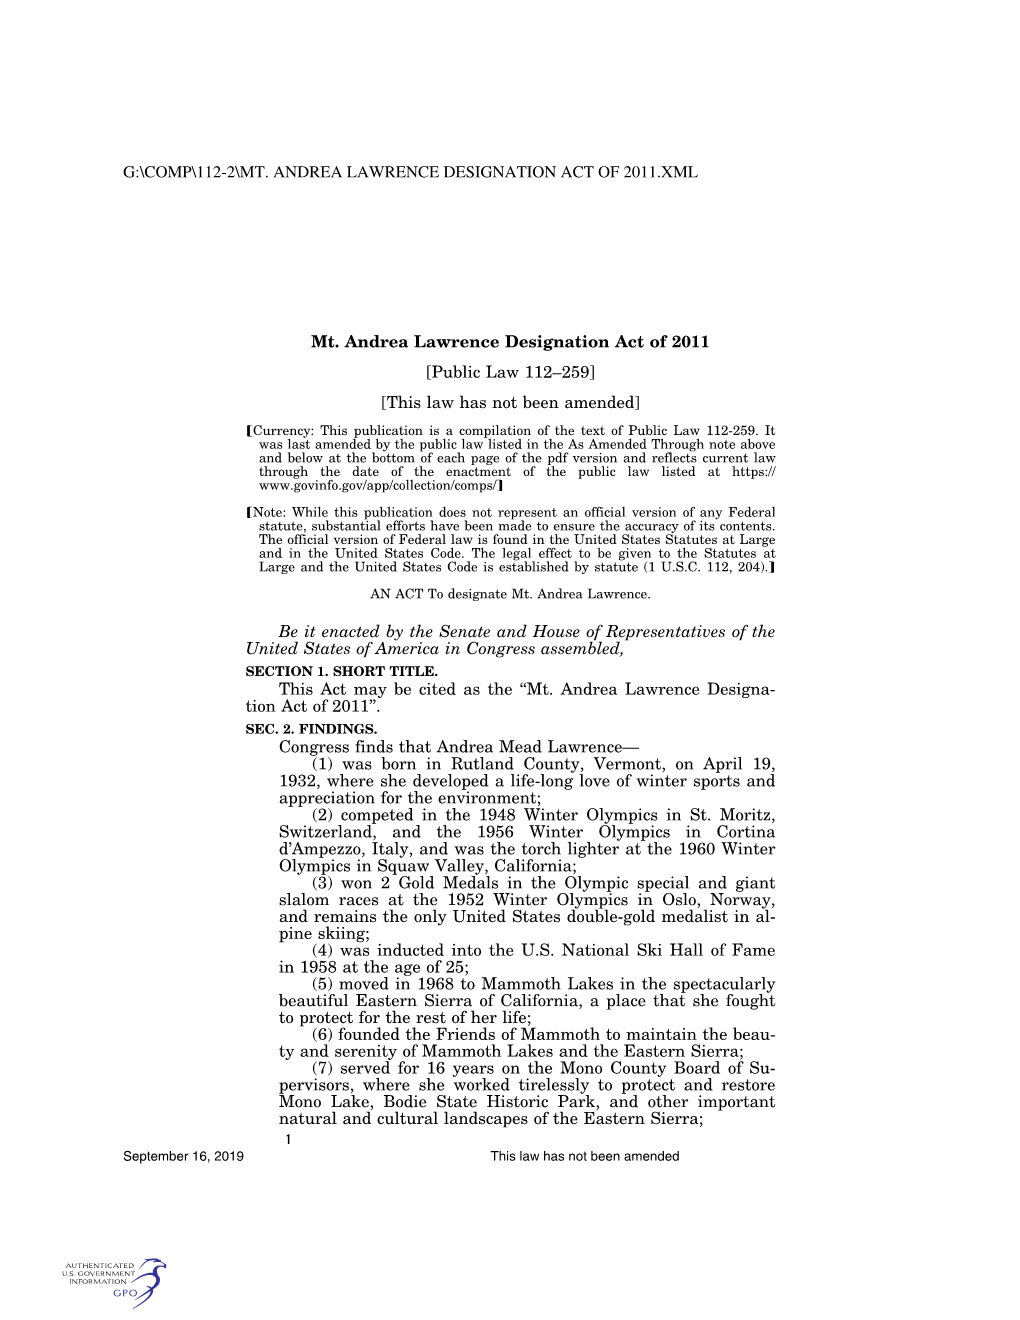 Mt. Andrea Lawrence Designation Act of 2011.Xml